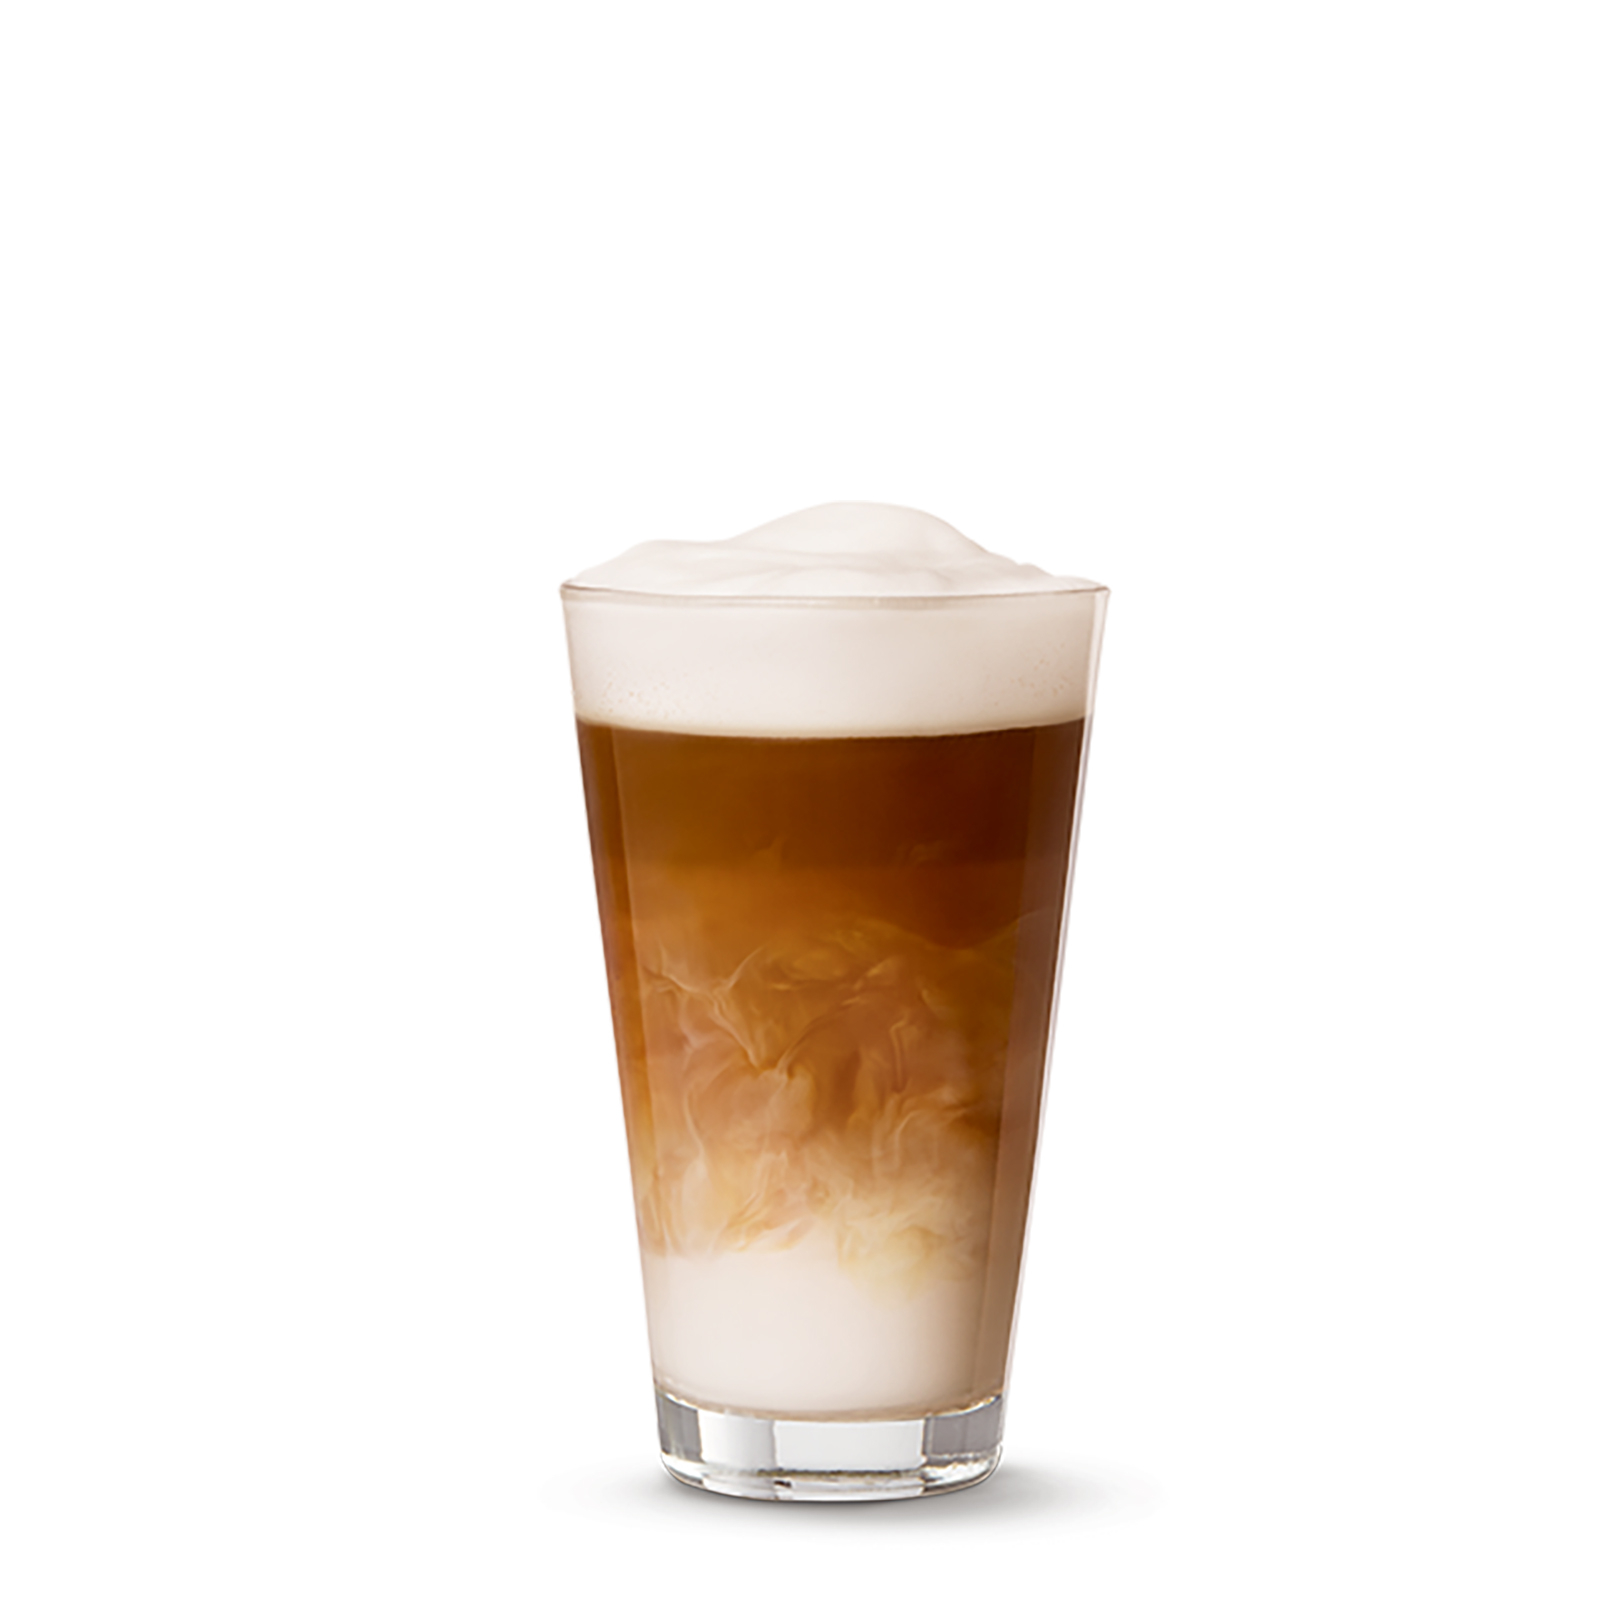 Capsule cafea, Jacobs Tassimo Cappuccino, 8 bauturi x 190 ml, 8 capsule  specialitate cafea + 8 capsule lapte 